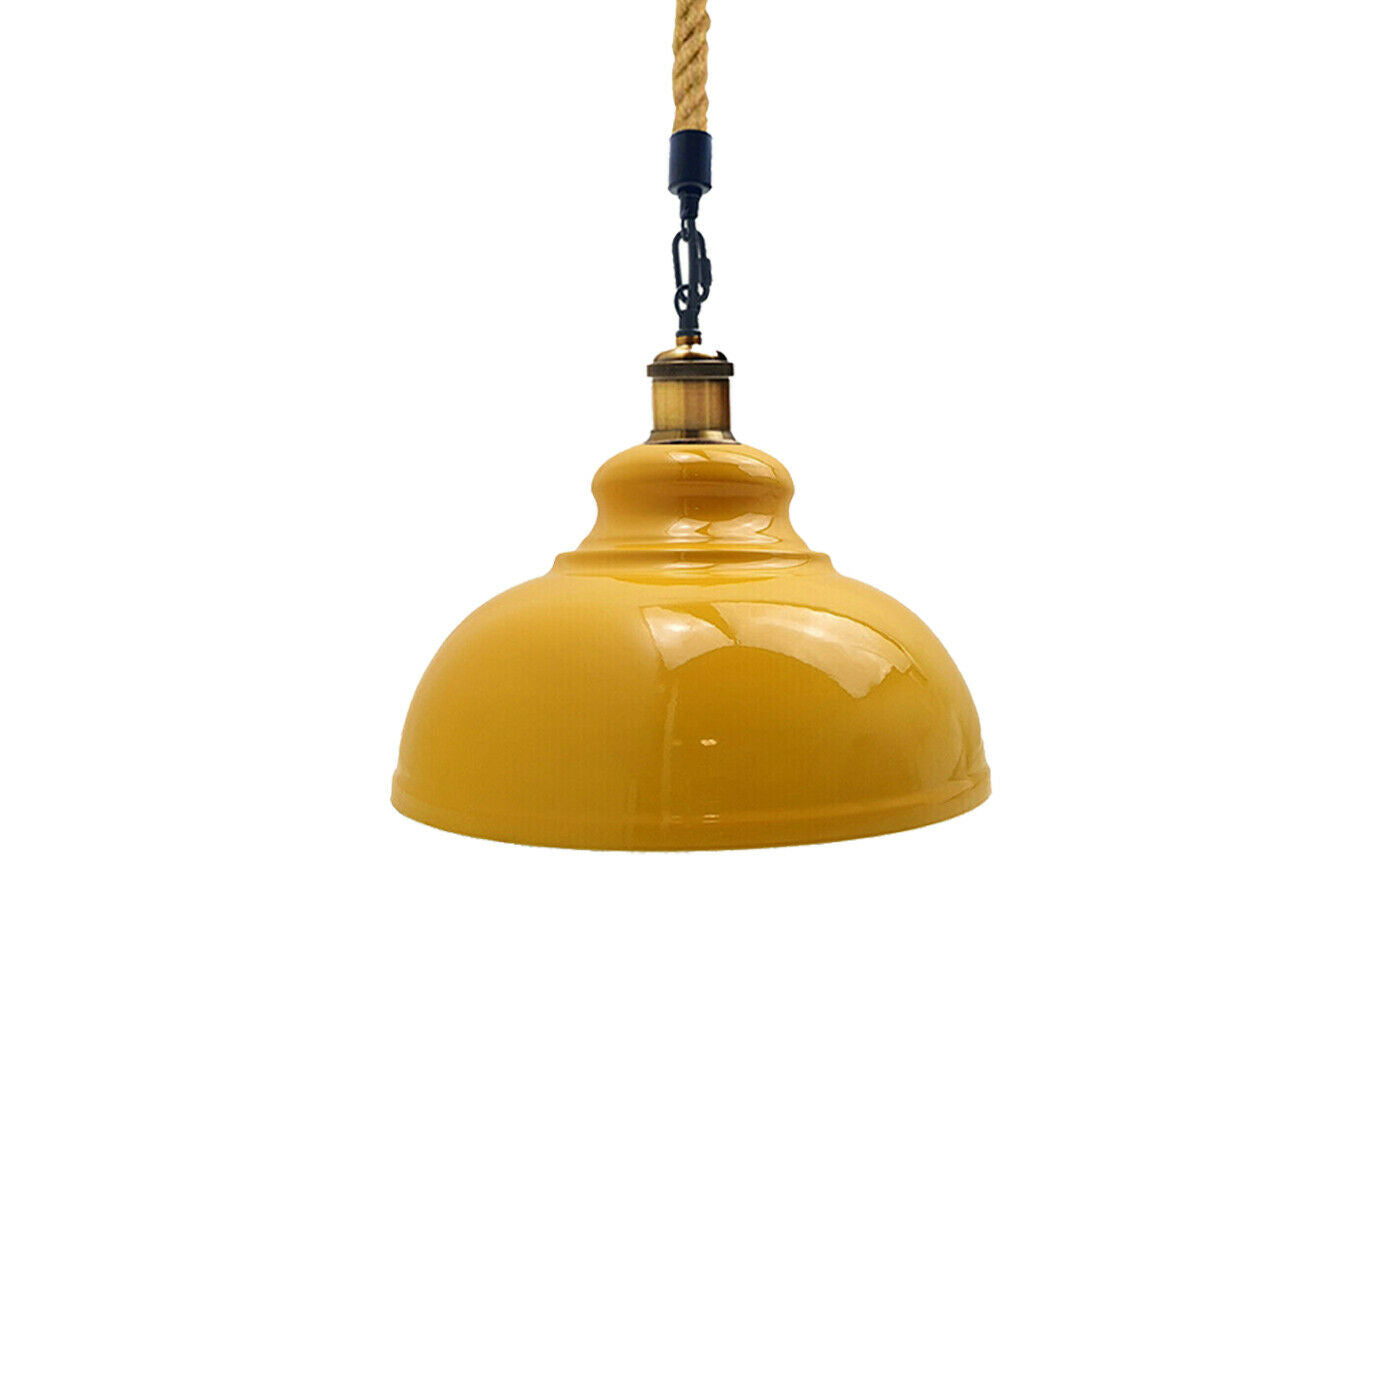 New ceiling lamps pendant lamp hanging lamp lamp industrial vintage lamp decoration~1943 - LEDSone UK Ltd